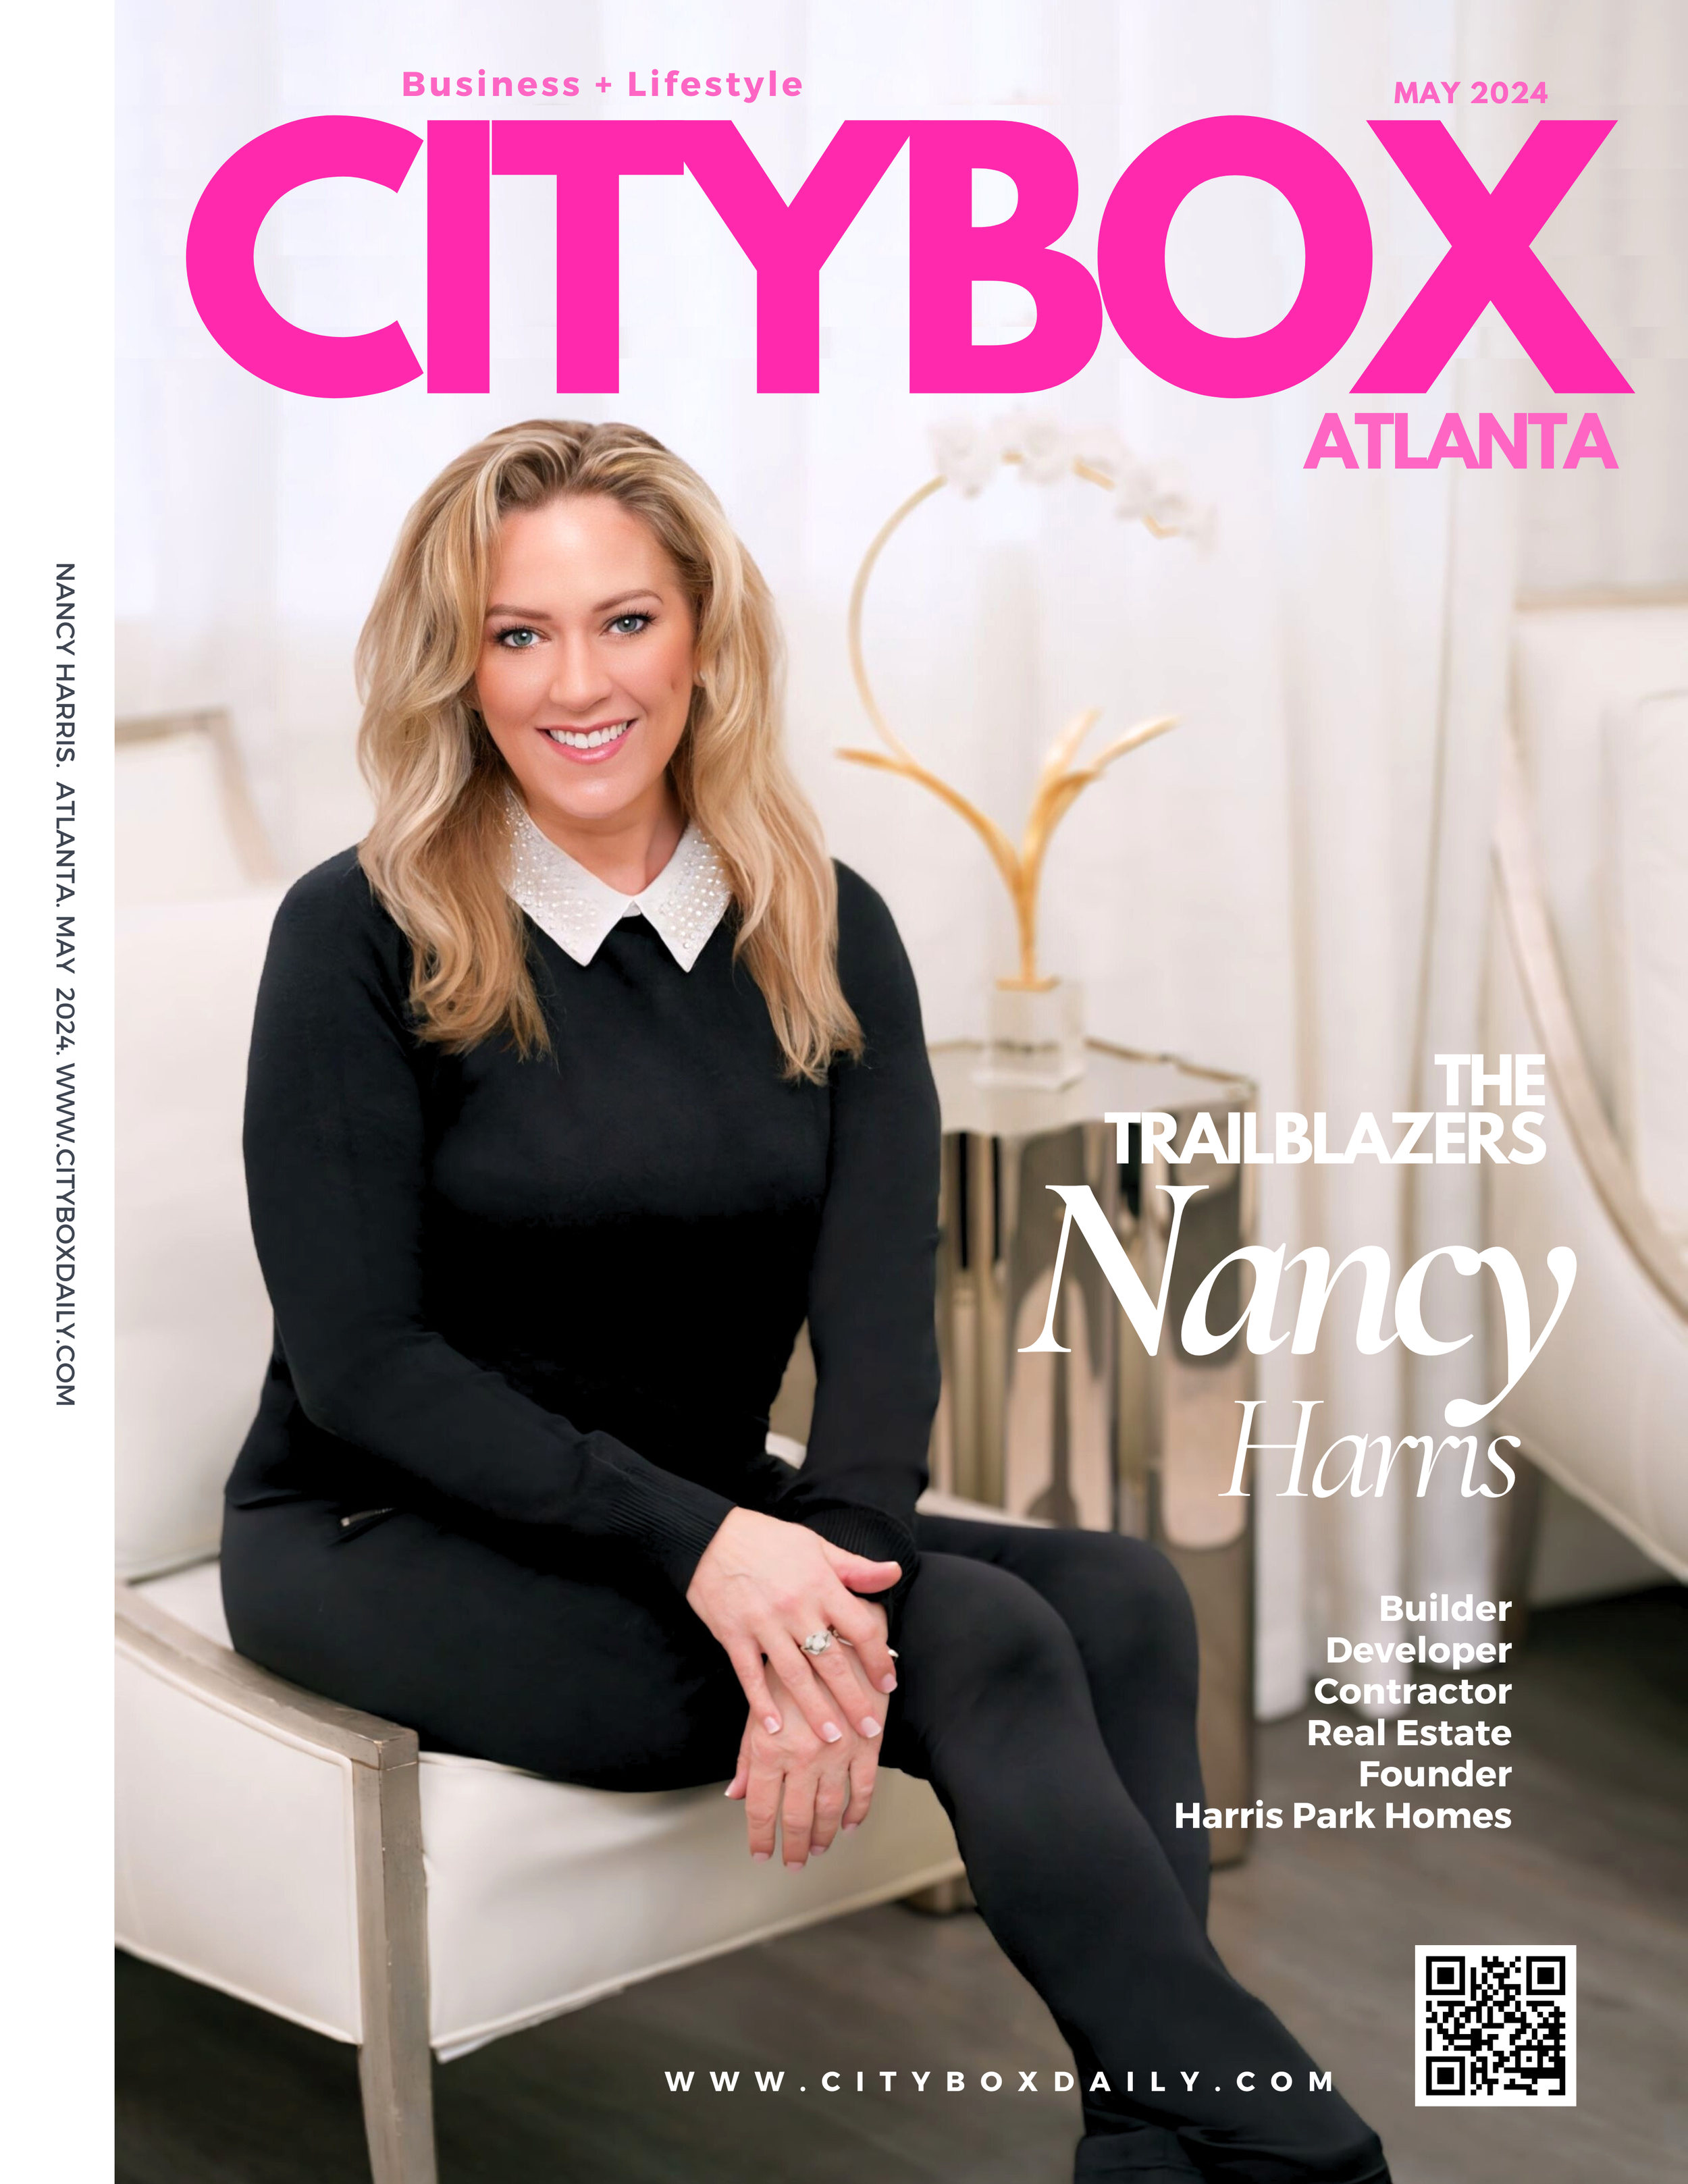 NANCY HARRIS CityBox Magazine Cover JUNE 2024 (2).png